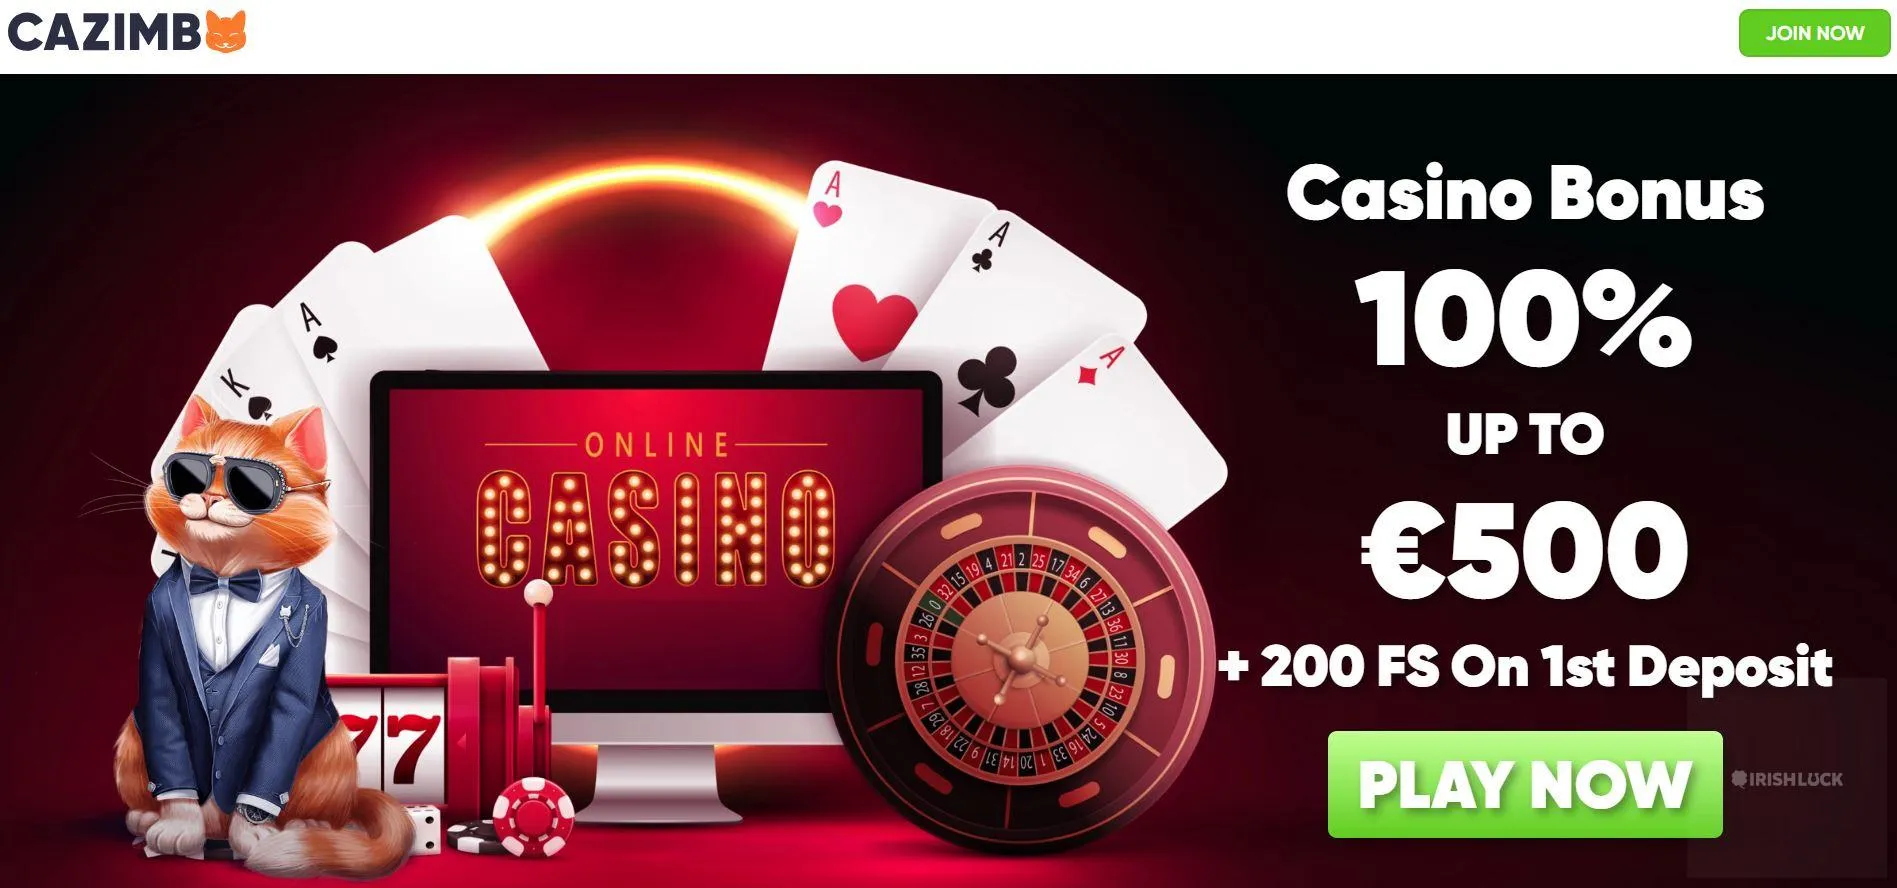 cazimbo casino online casino rabidi n.v. casinos